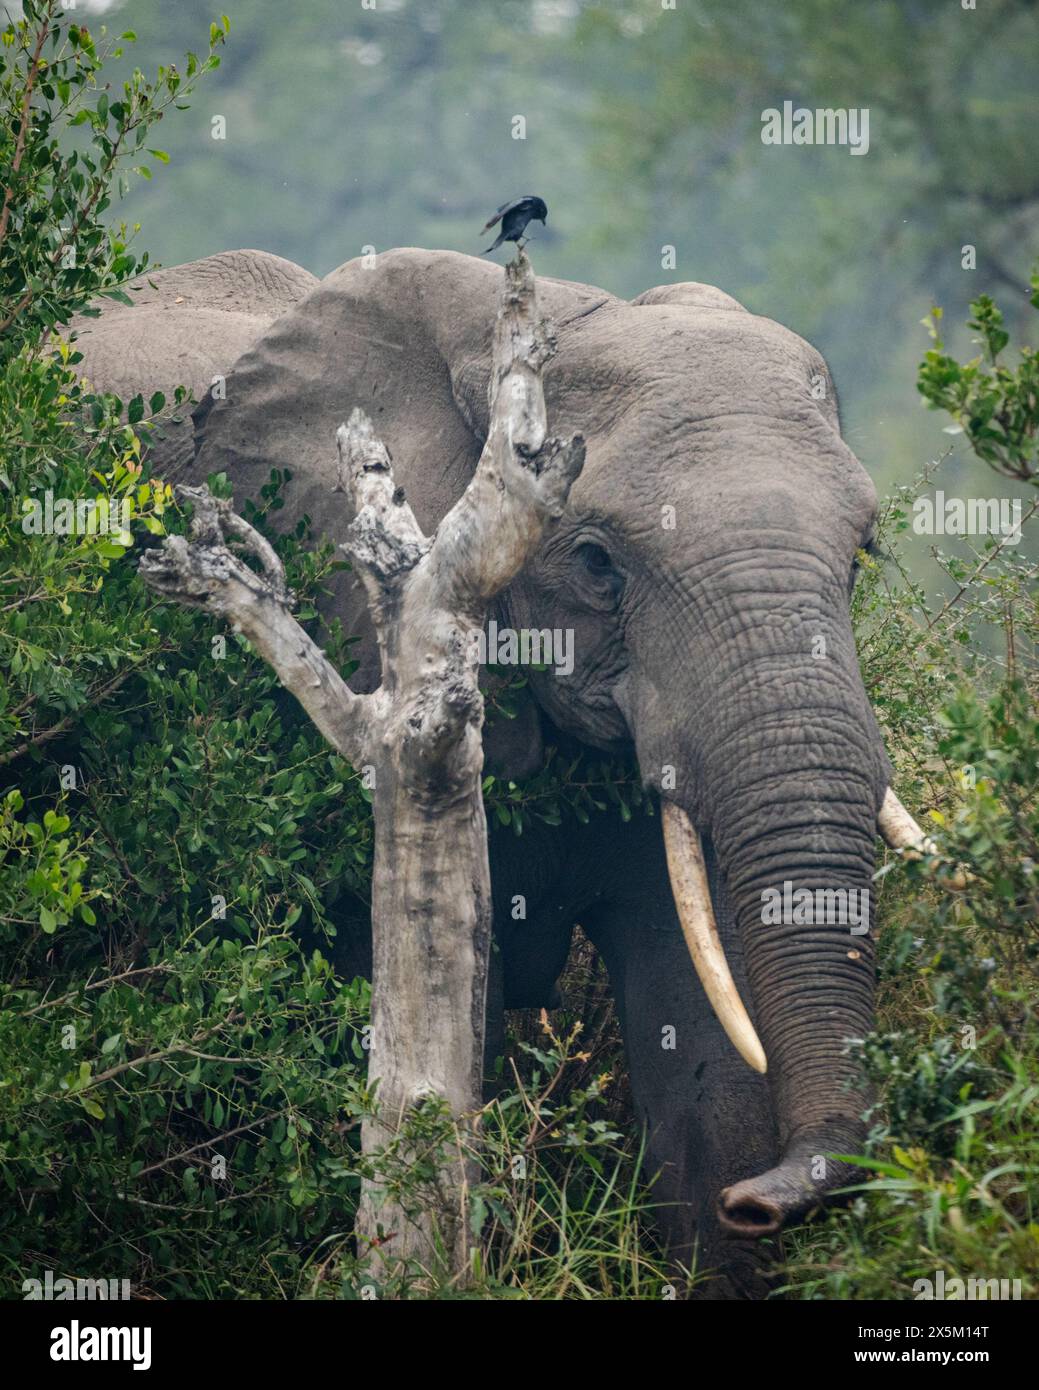 An elephant, Loxodonta africana, walking through foliage. Stock Photo